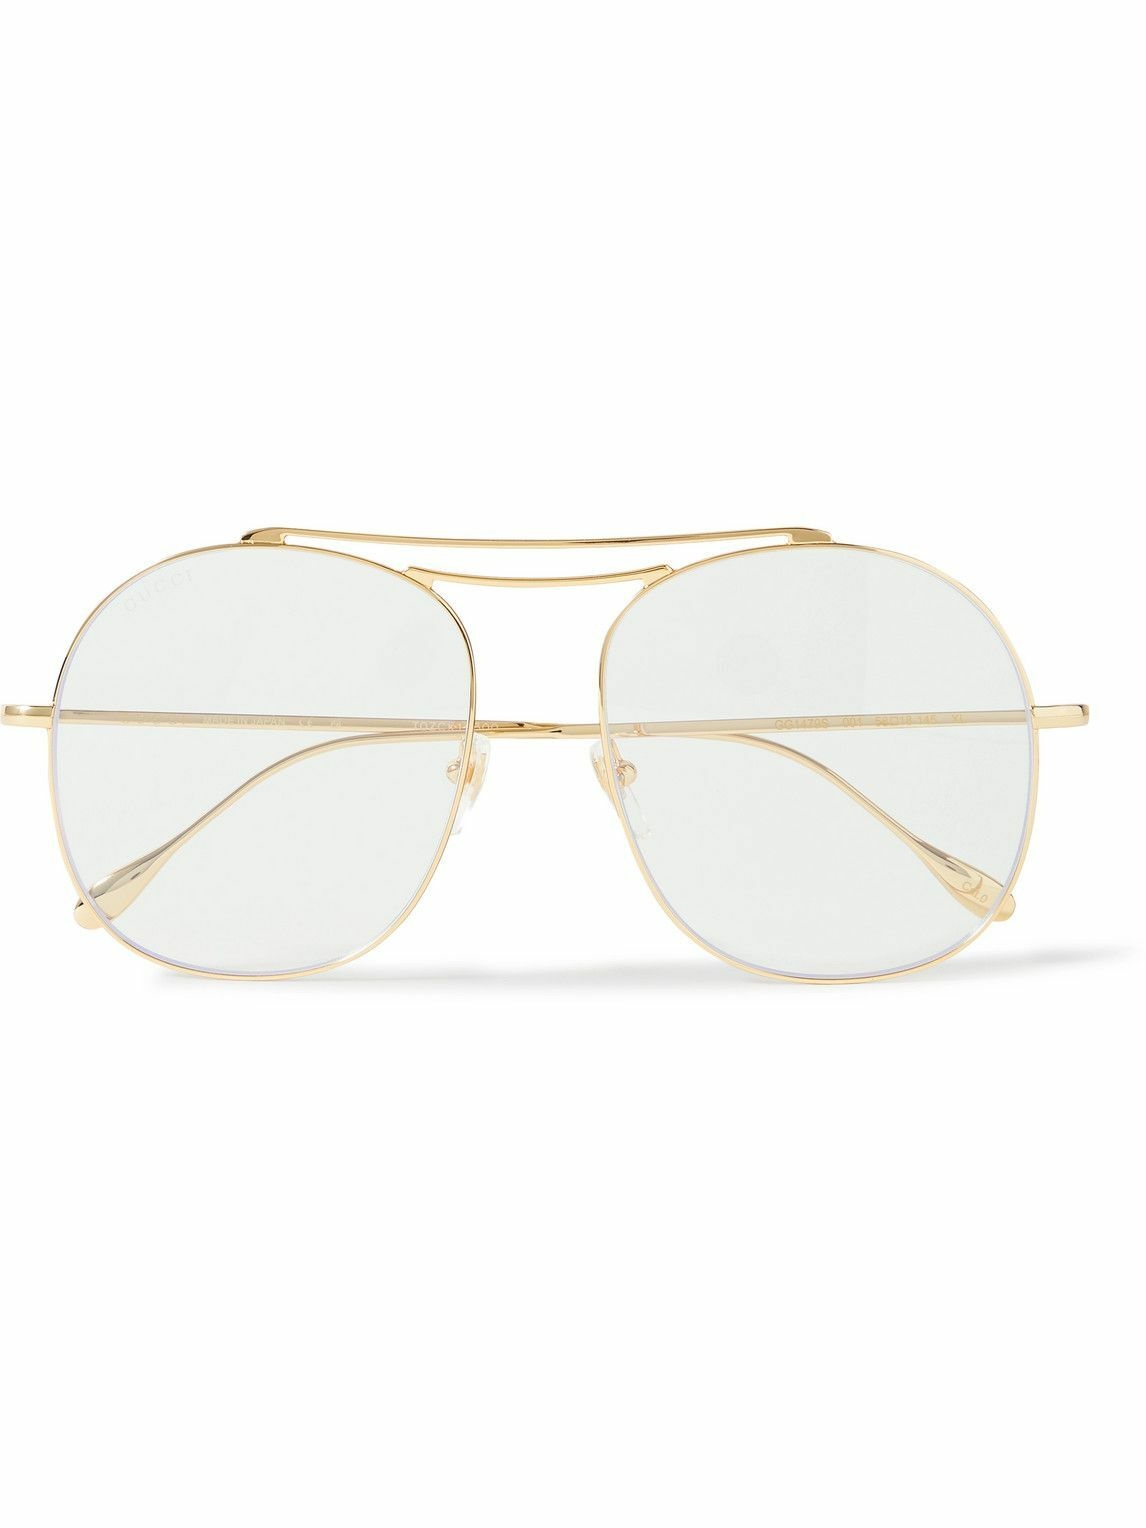 Gucci Eyewear - Oversized Aviator-Style Gold-Tone Optical Glasses Gucci